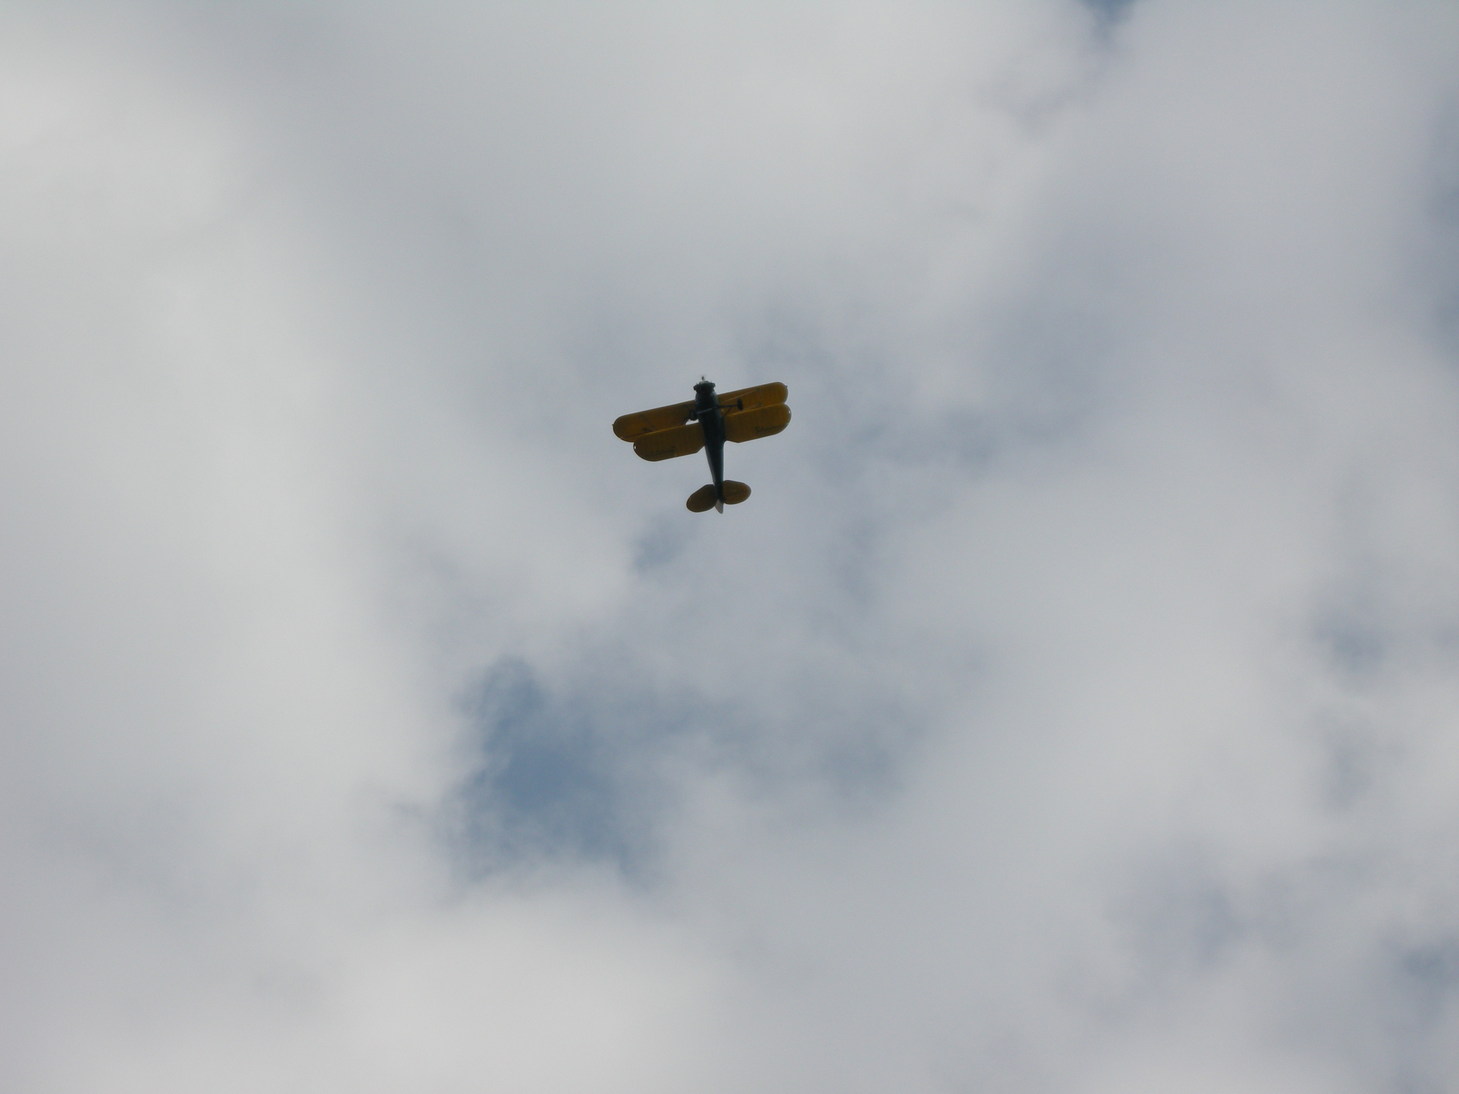 Manteo, NC: Biplane over Manteo, October 2007